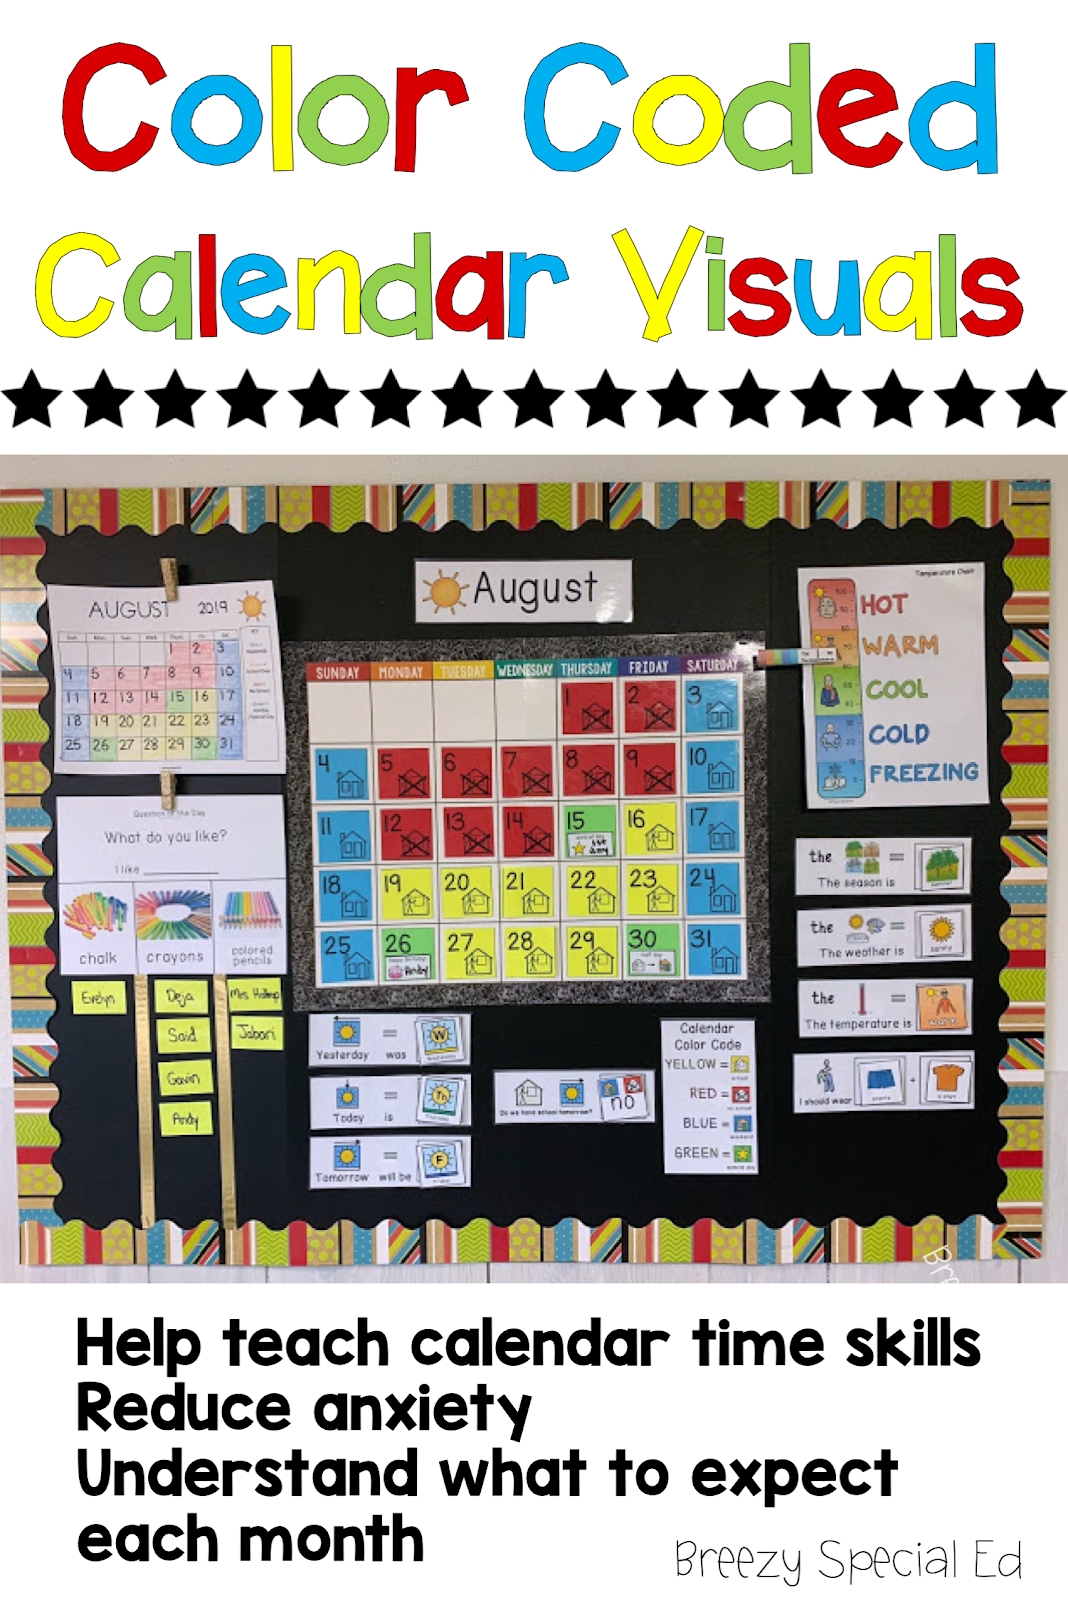 Color Coded Calendar Visuals - Breezy Special Ed